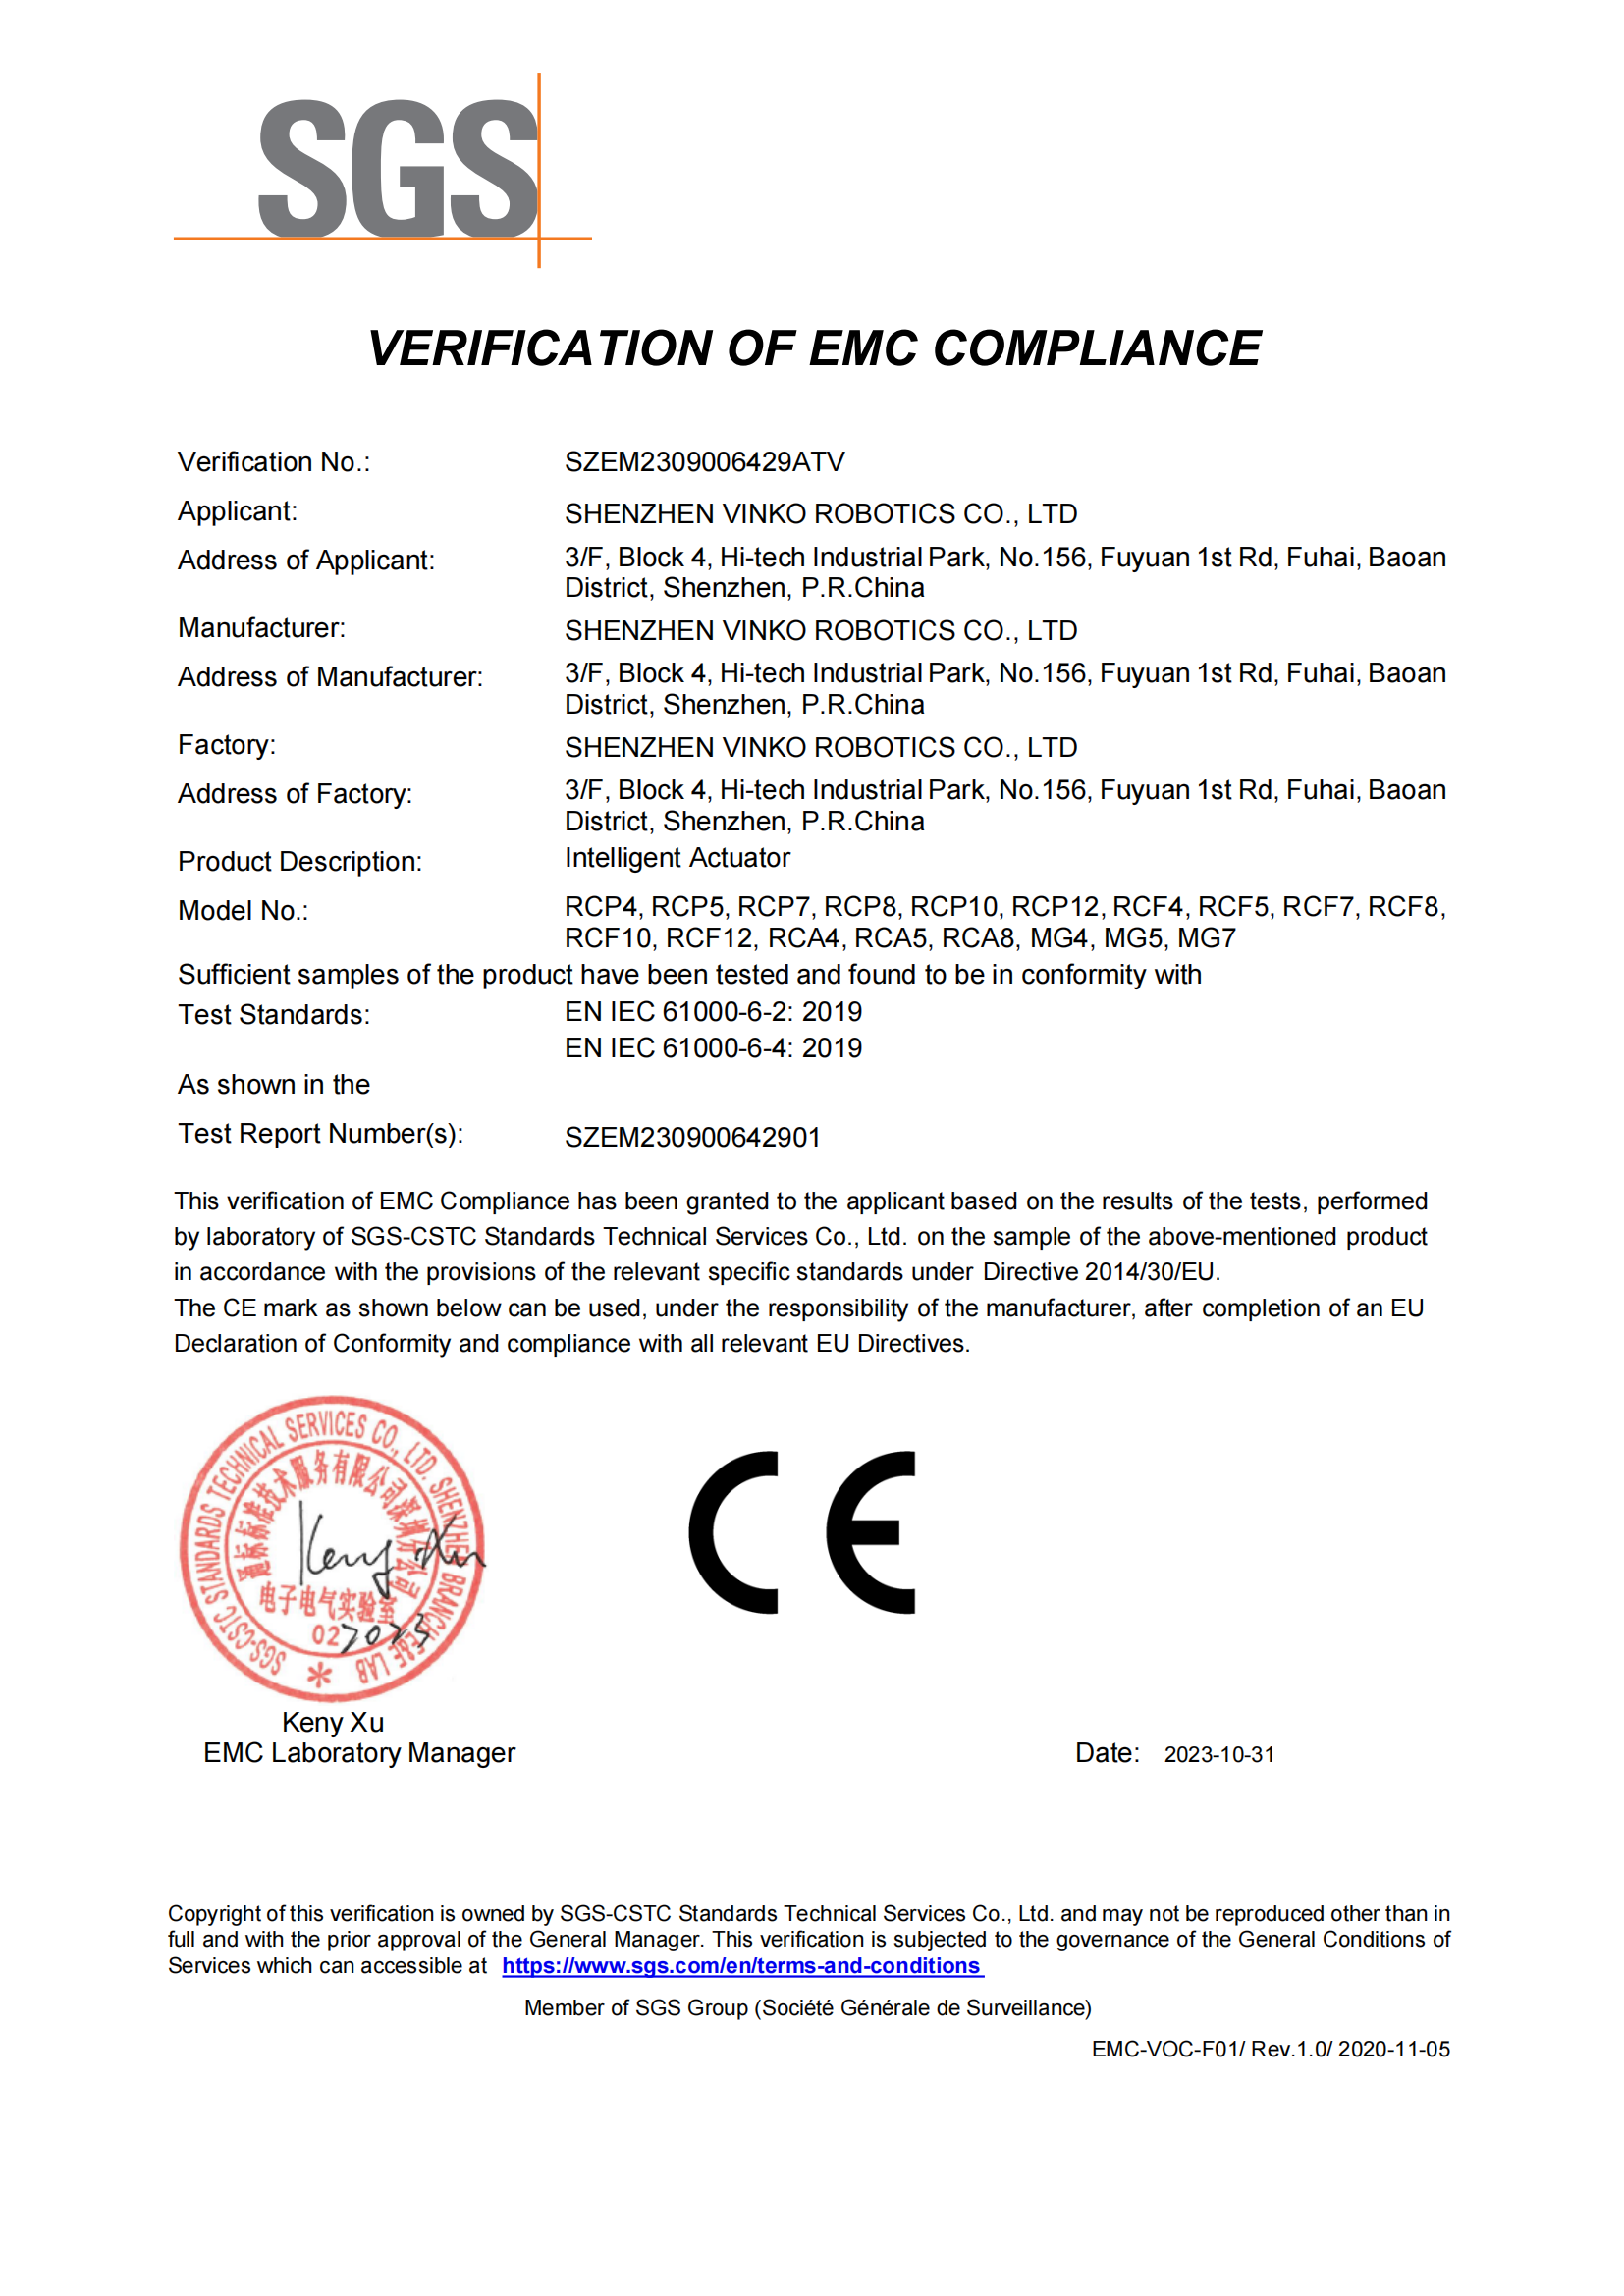 Z3 CE Certificate (SZEM2309006429ATV)